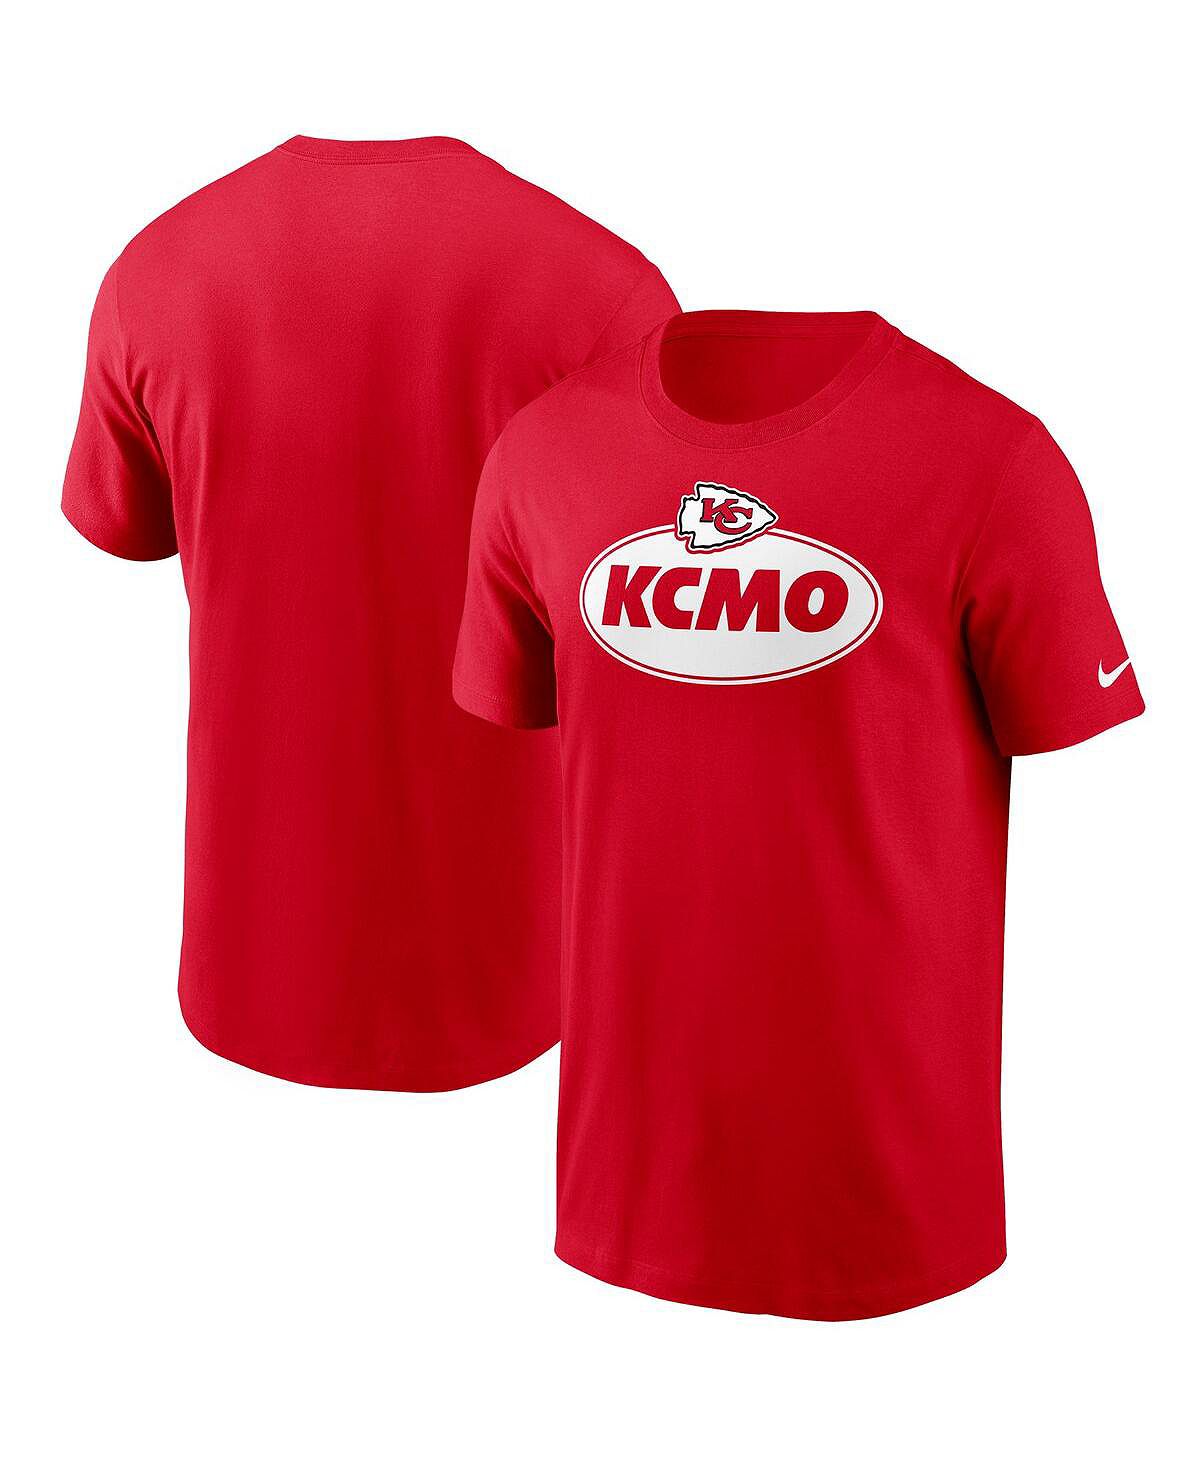 Мужская красная футболка kansas city chiefs hometown collection kcmo Nike, красный лилейник канзас сити кикер